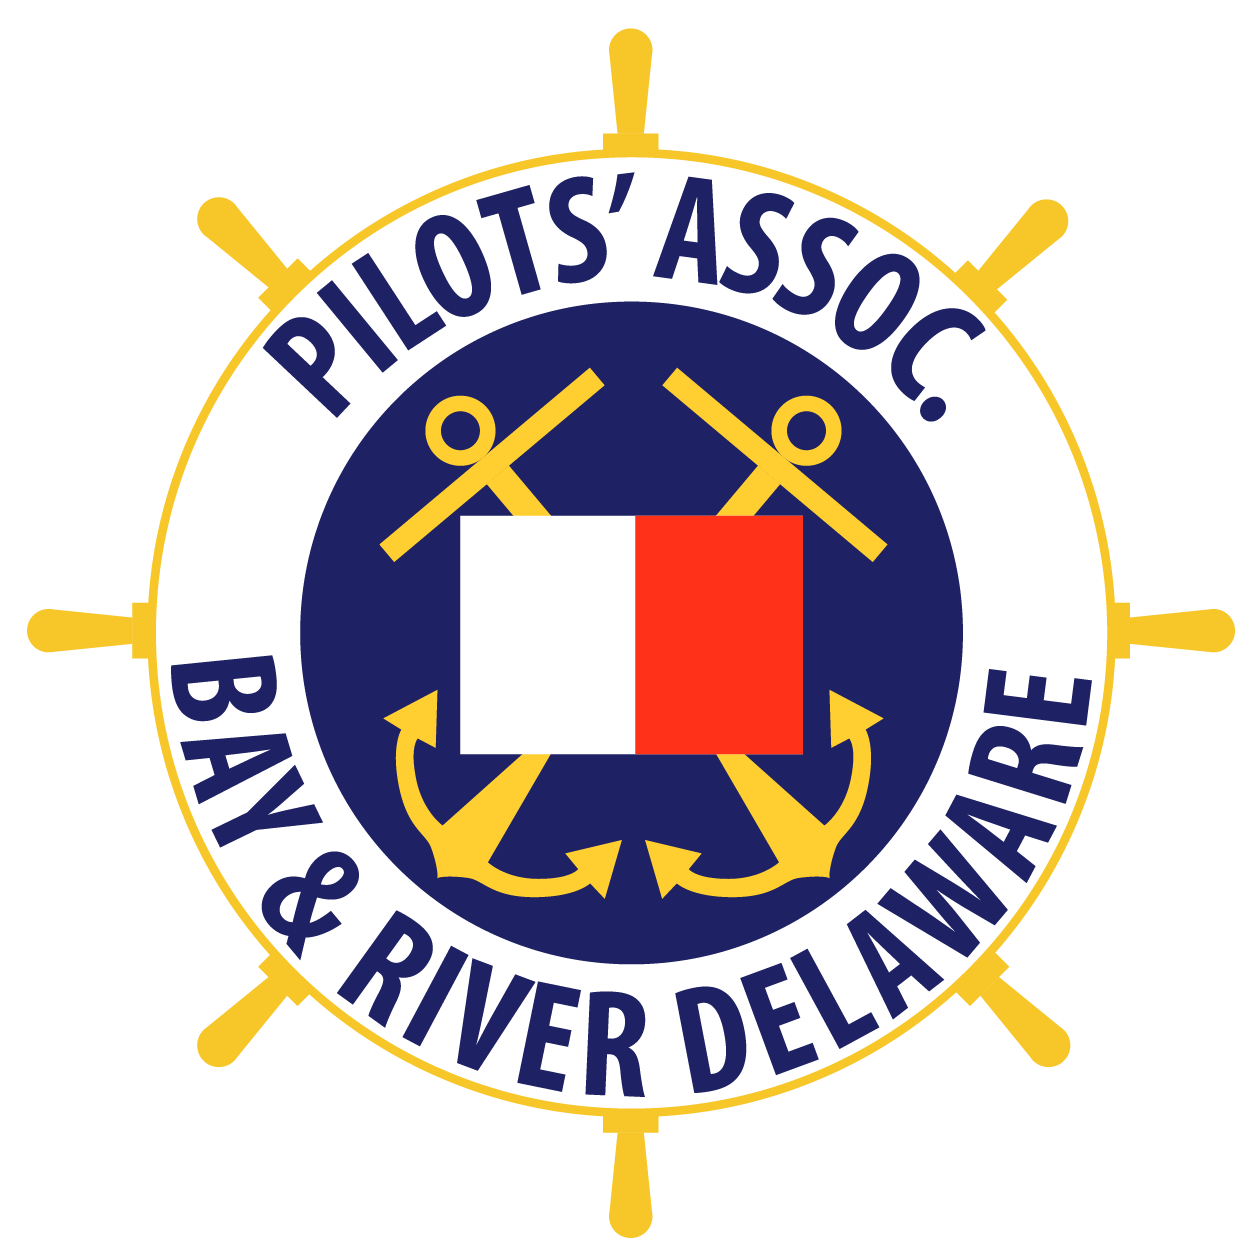 Pilots Association for Bay & River DE